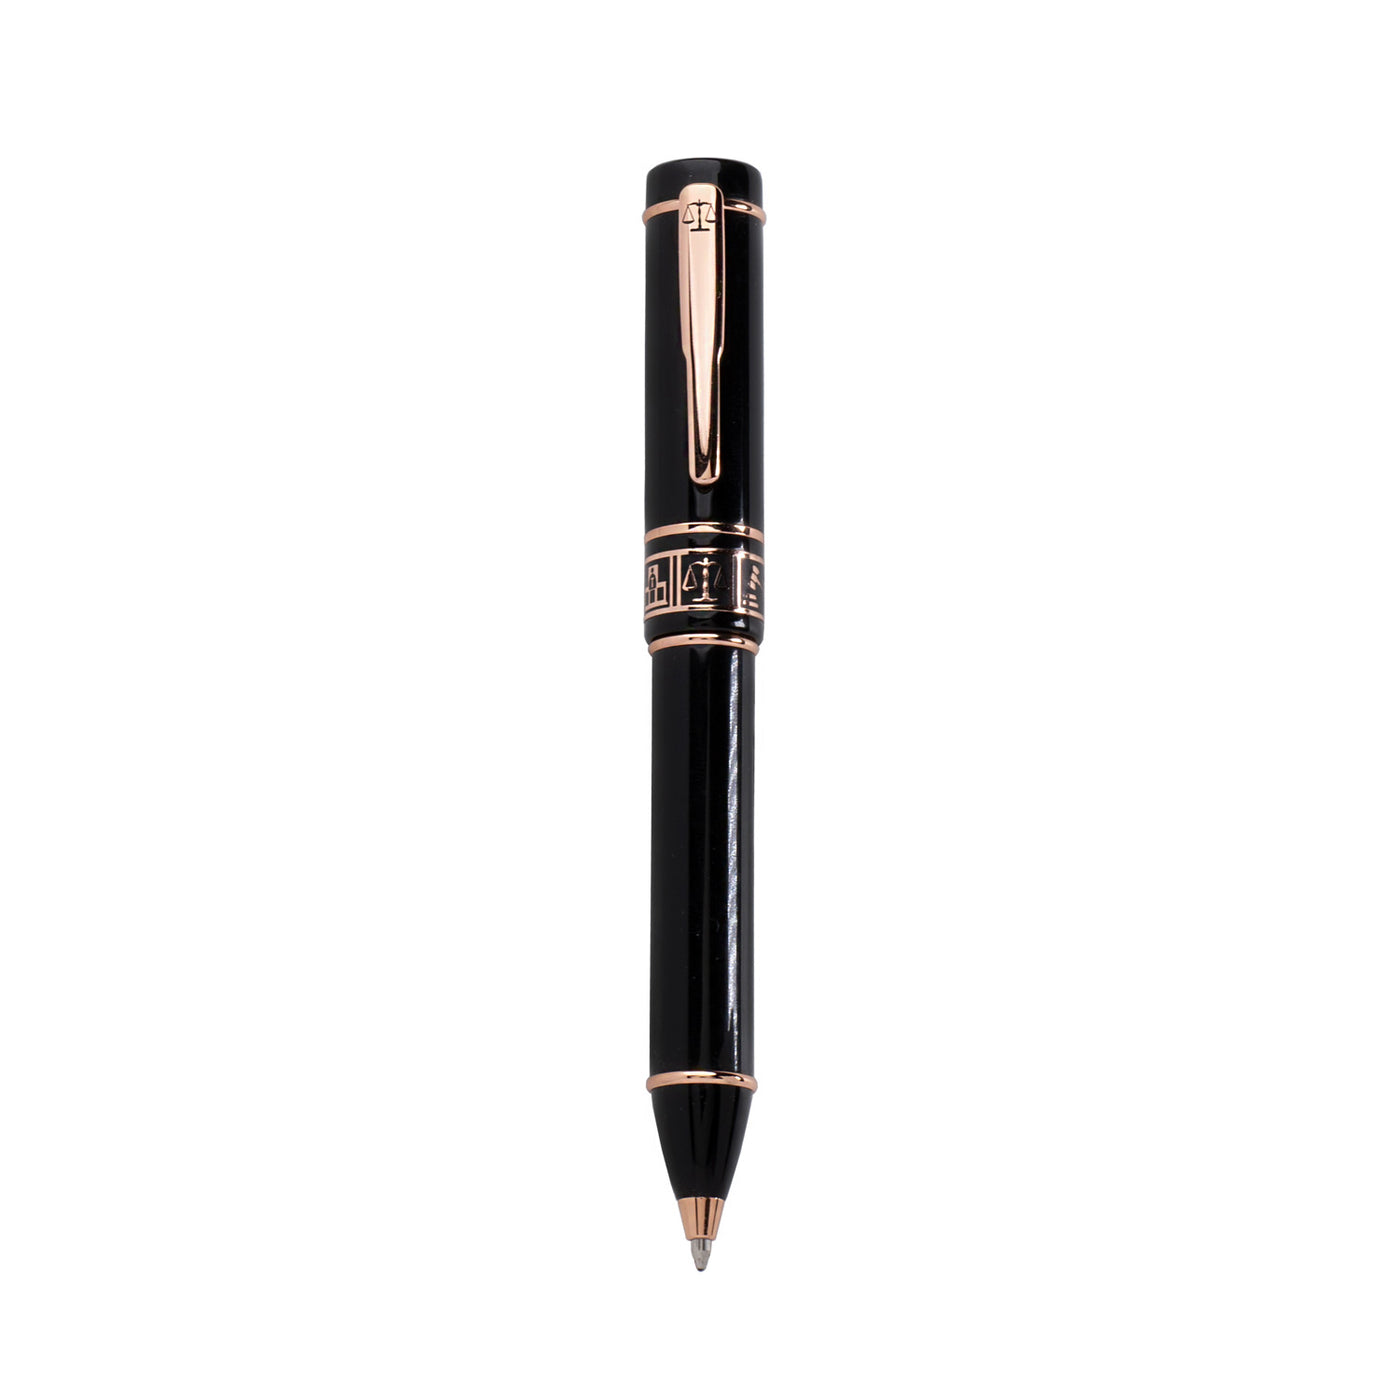 Conklin Lex Ball Pen - Black RGT (Special Edition) 1